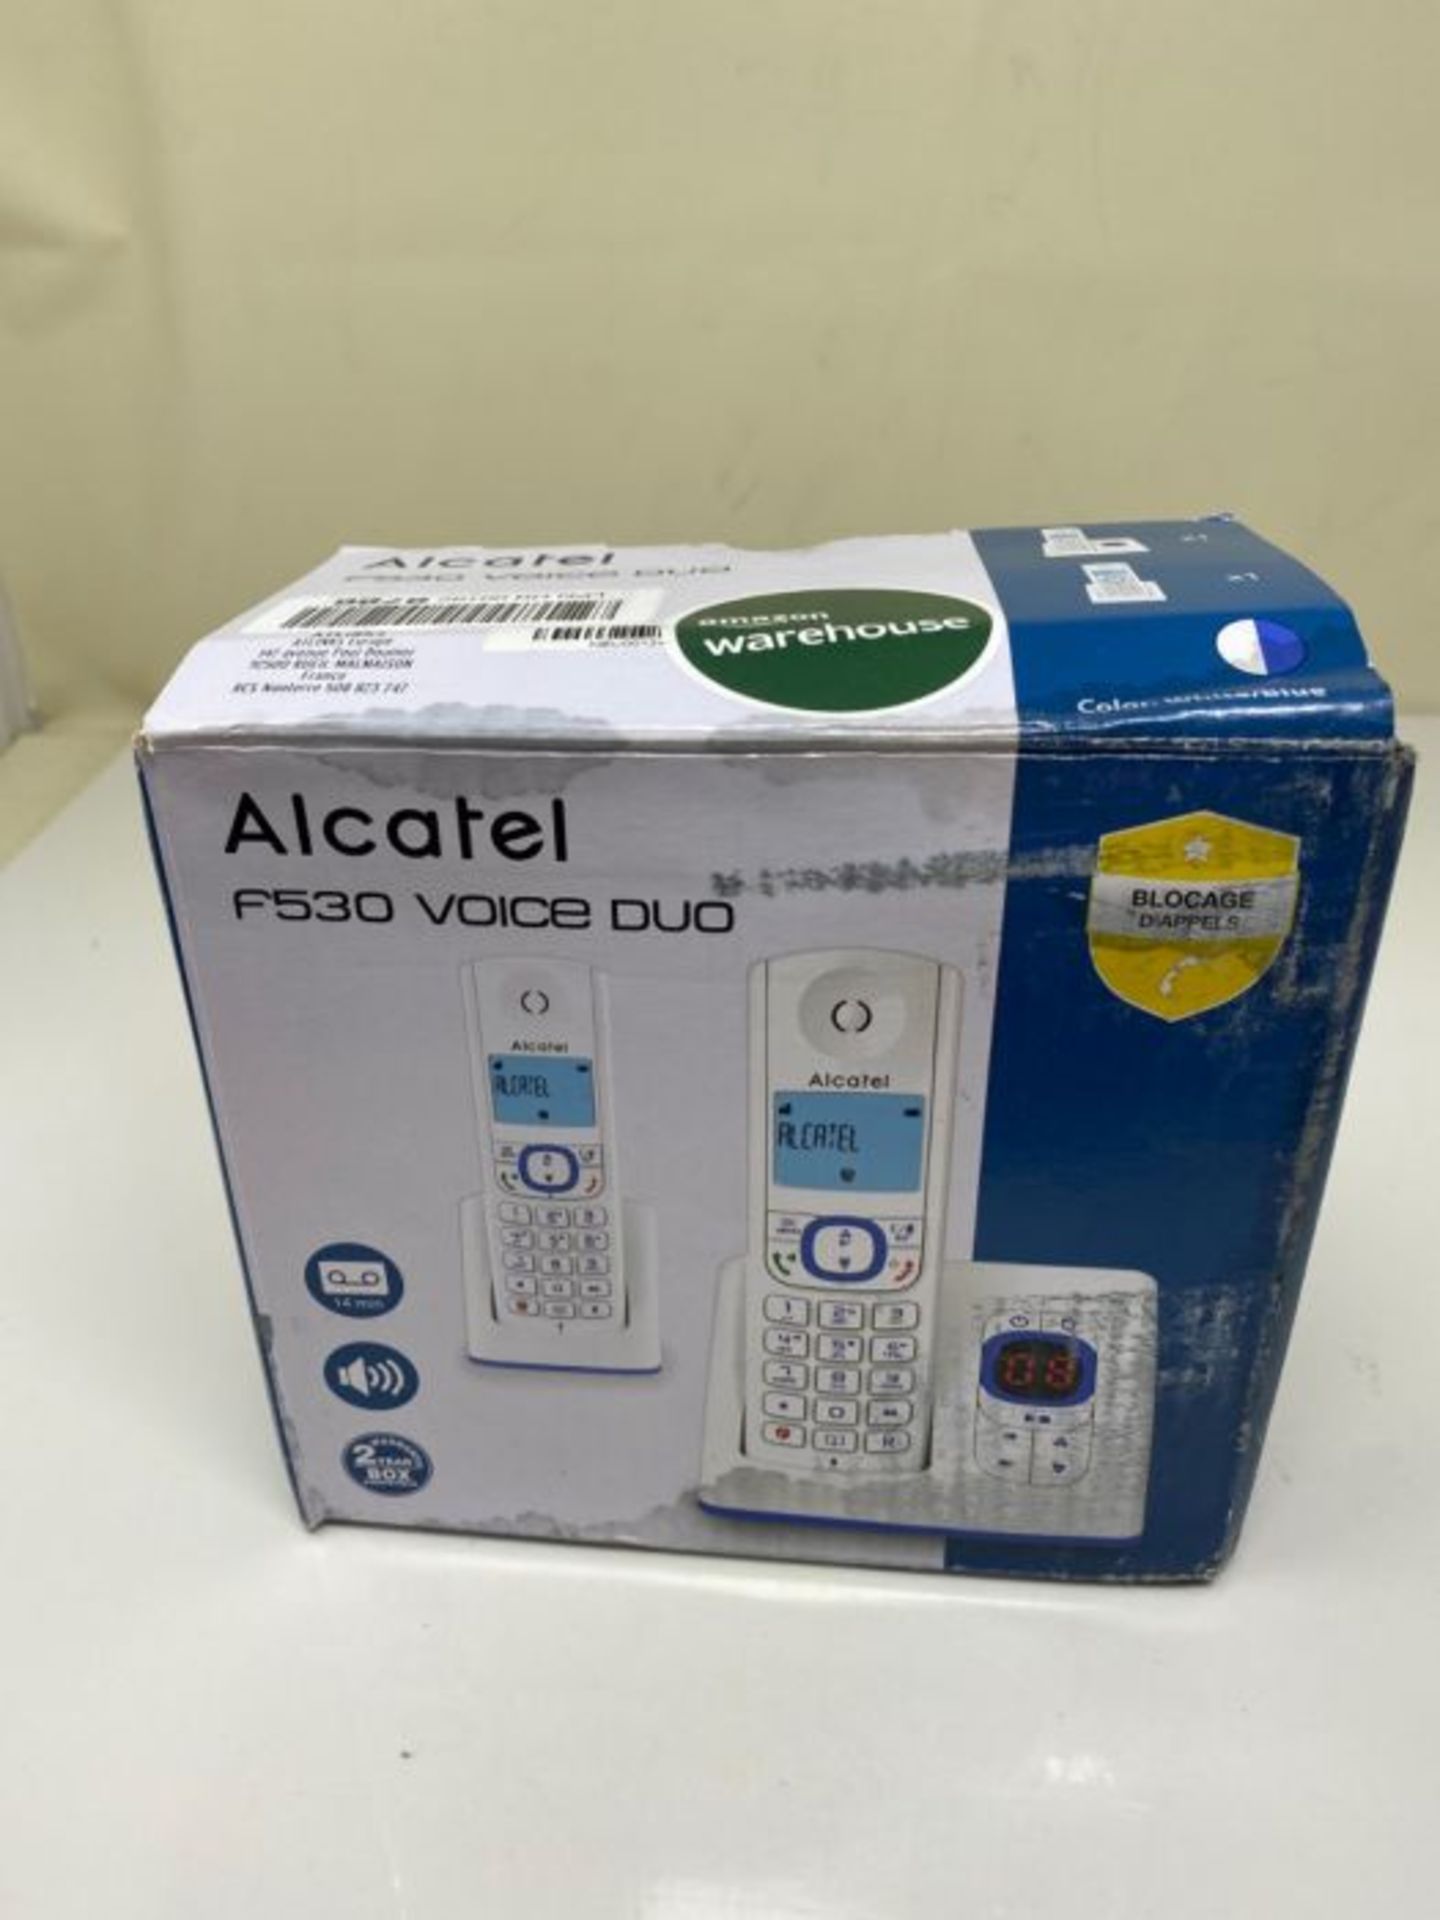 Alcatel F530 voice duo bleu - Image 2 of 3